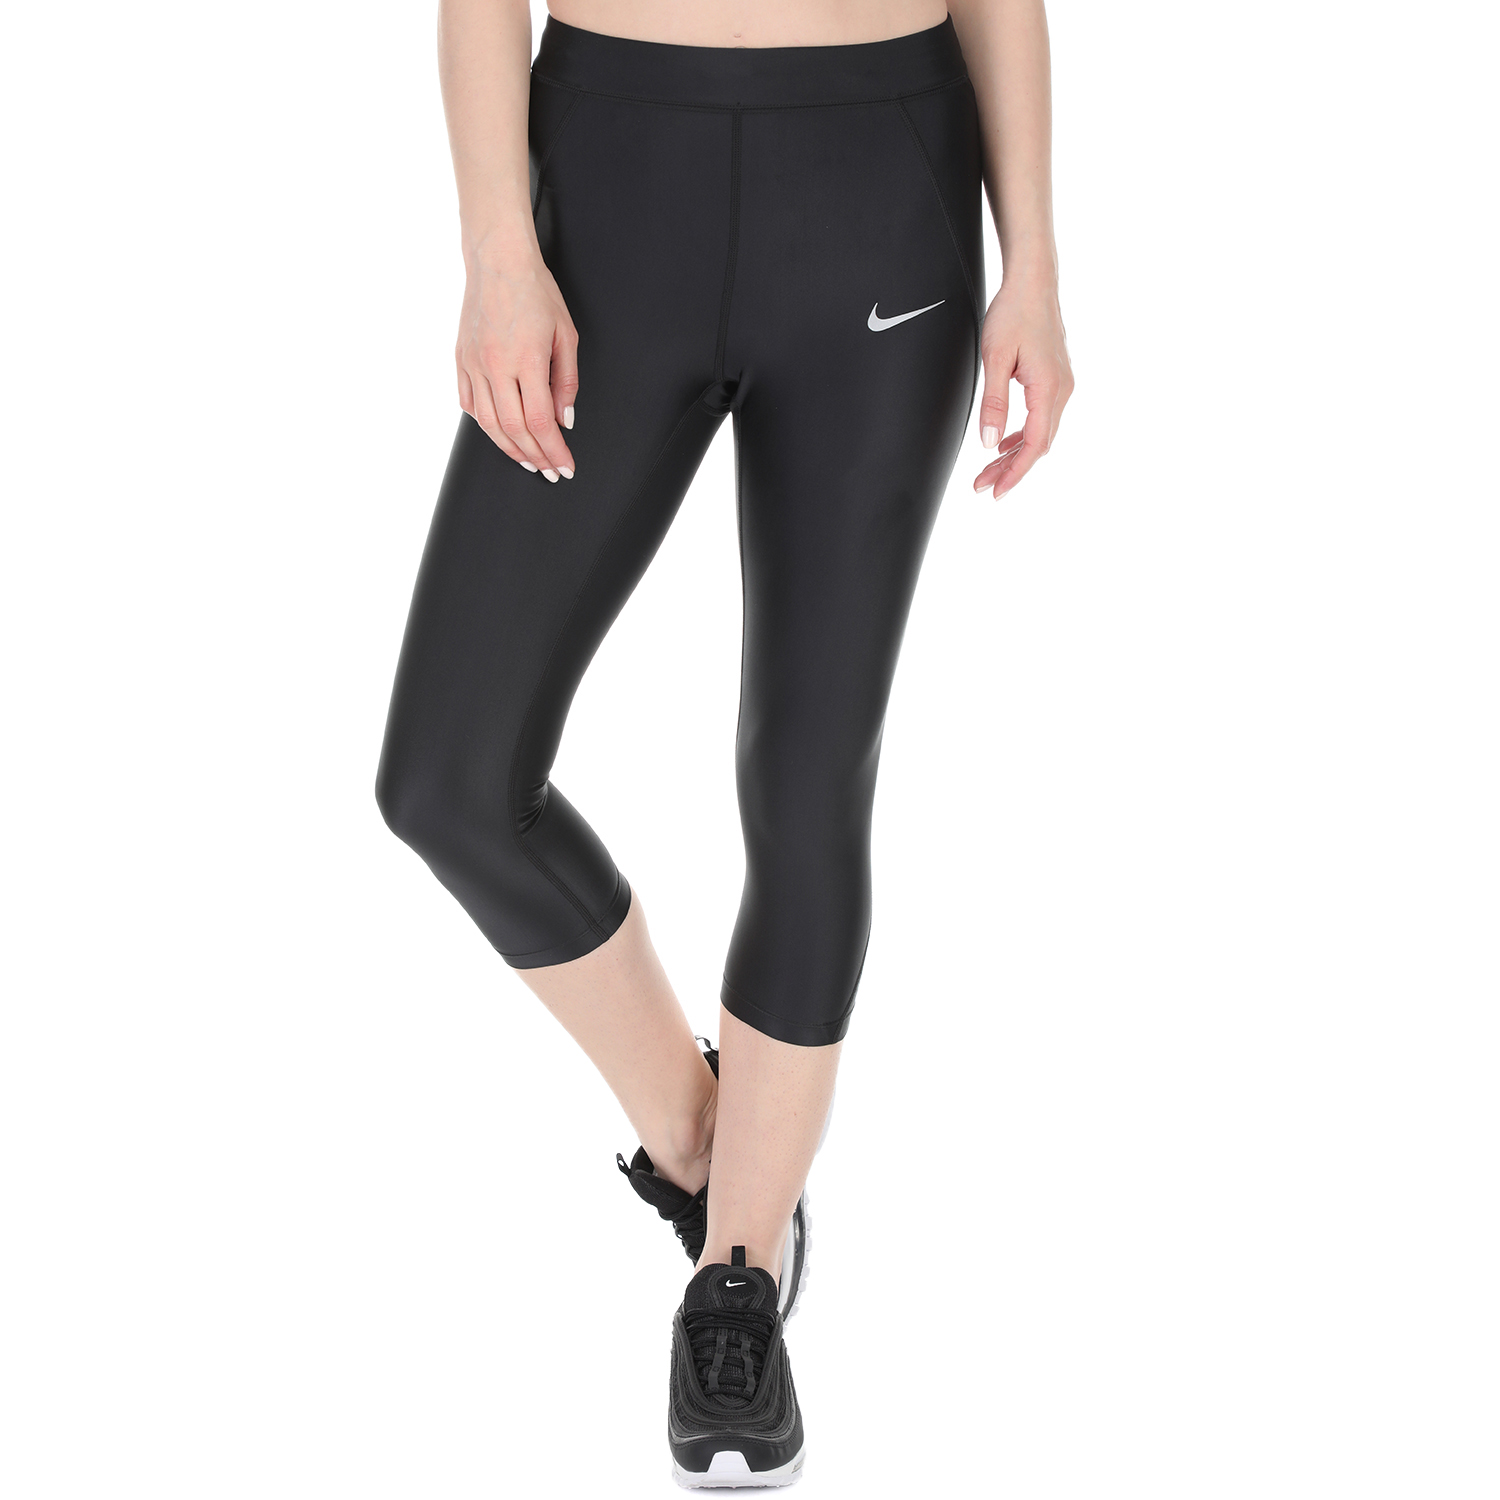 NIKE - Γυναικείο αθλητικό κολάν Nike Speed Cap 3/4 μαύρο Γυναικεία/Ρούχα/Αθλητικά/Κολάν